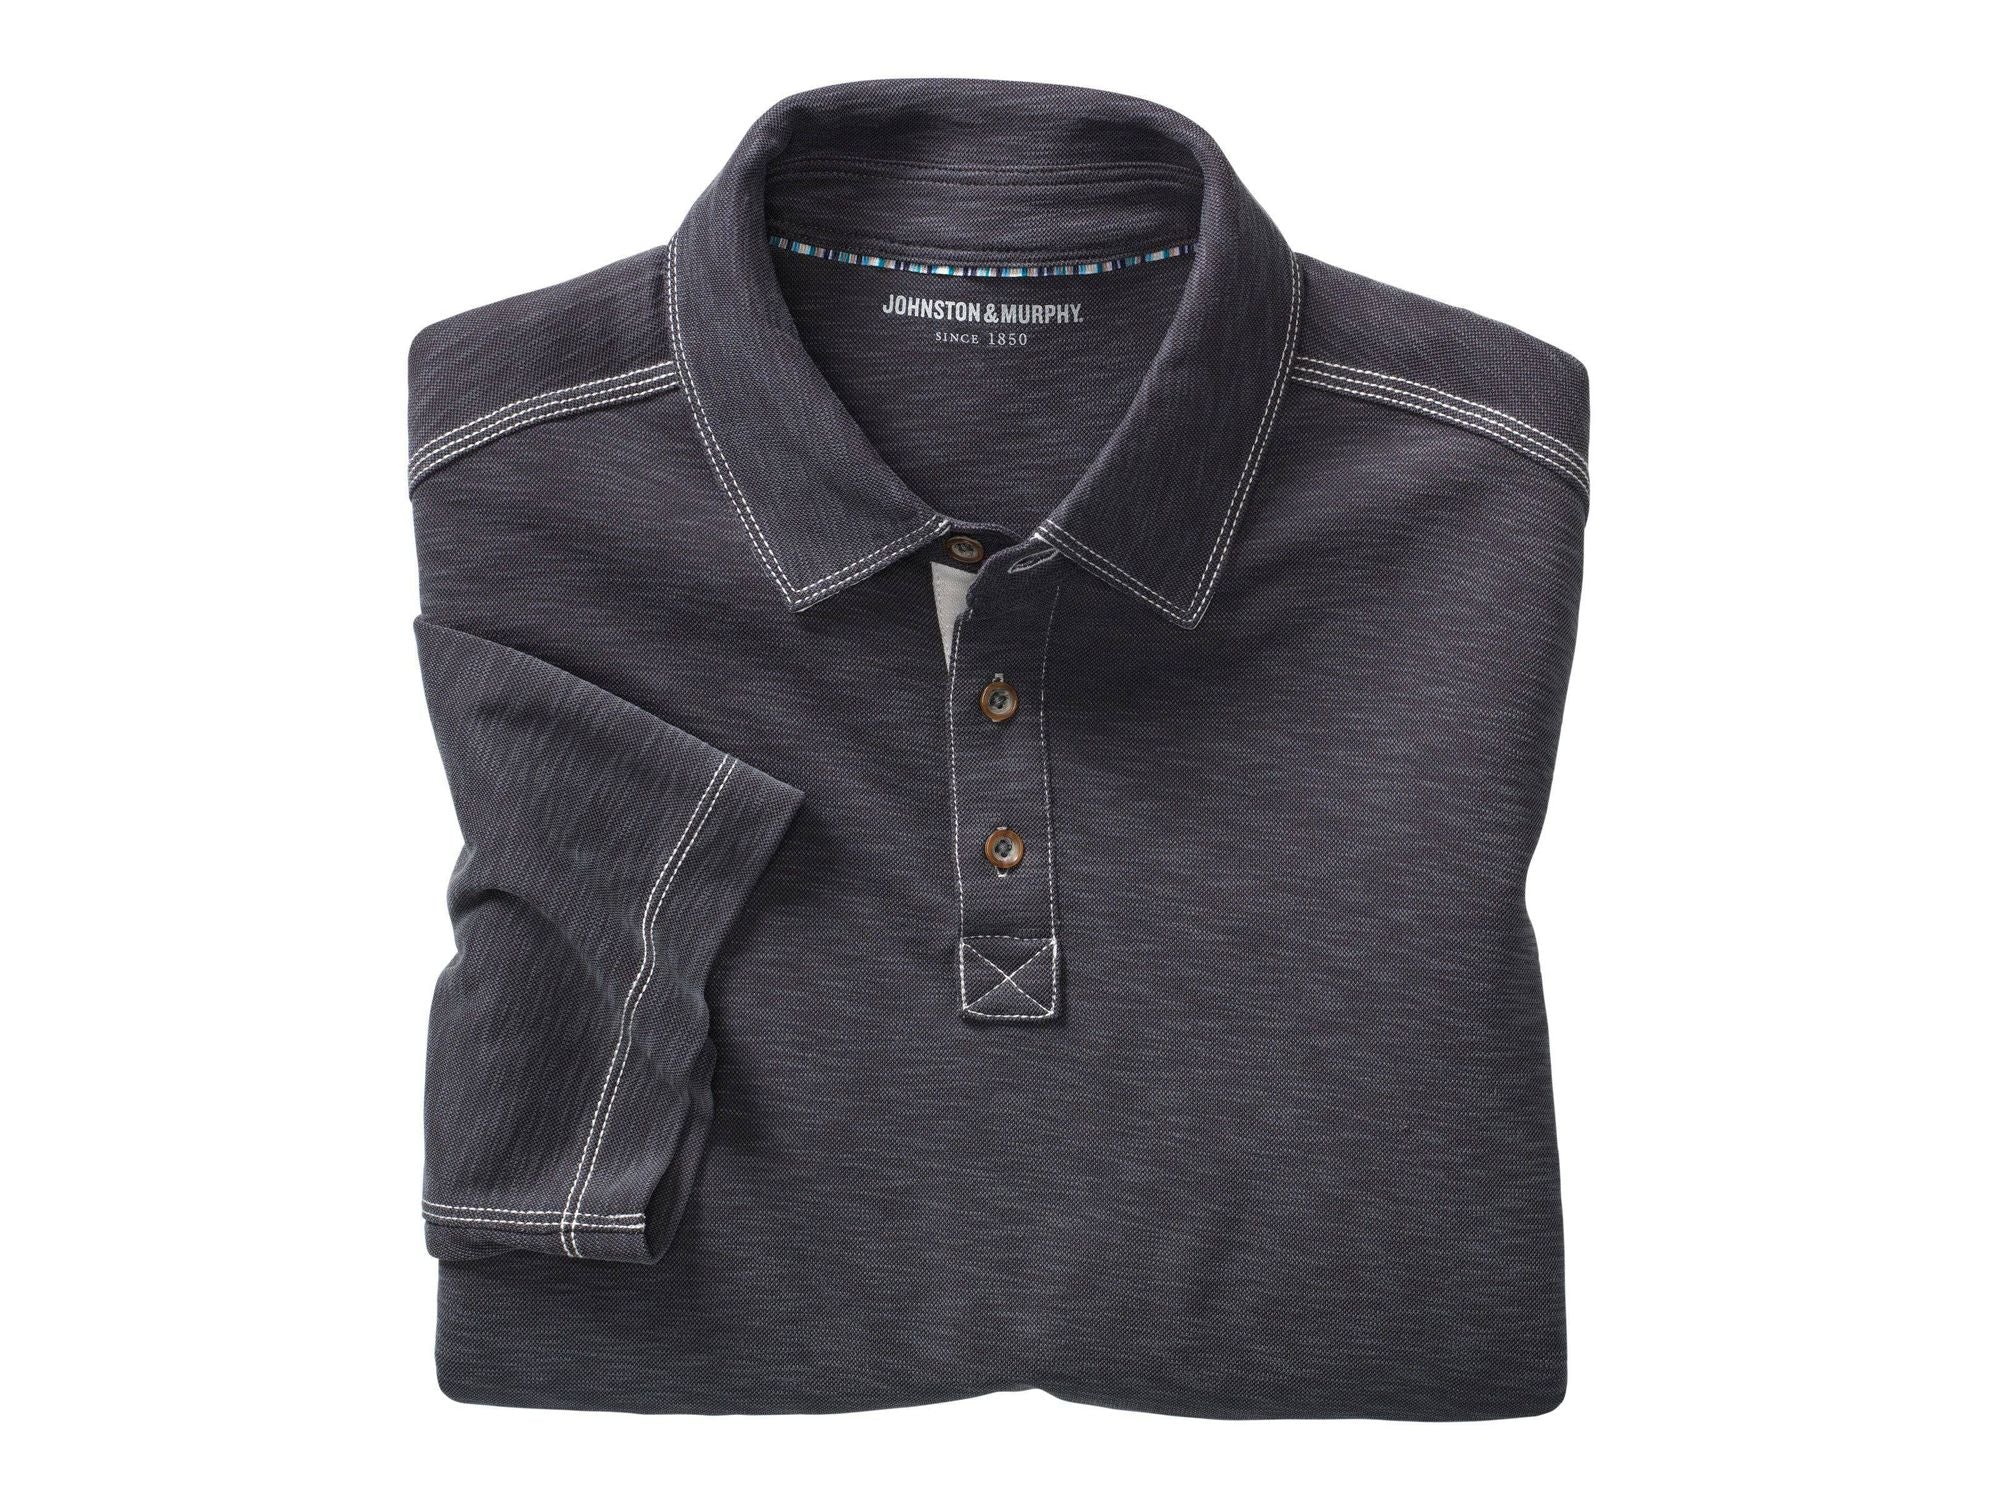 Johnston & Murphy Vintage Slub Polo Shirt in Charcoal - Rainwater's Men's Clothing and Tuxedo Rental